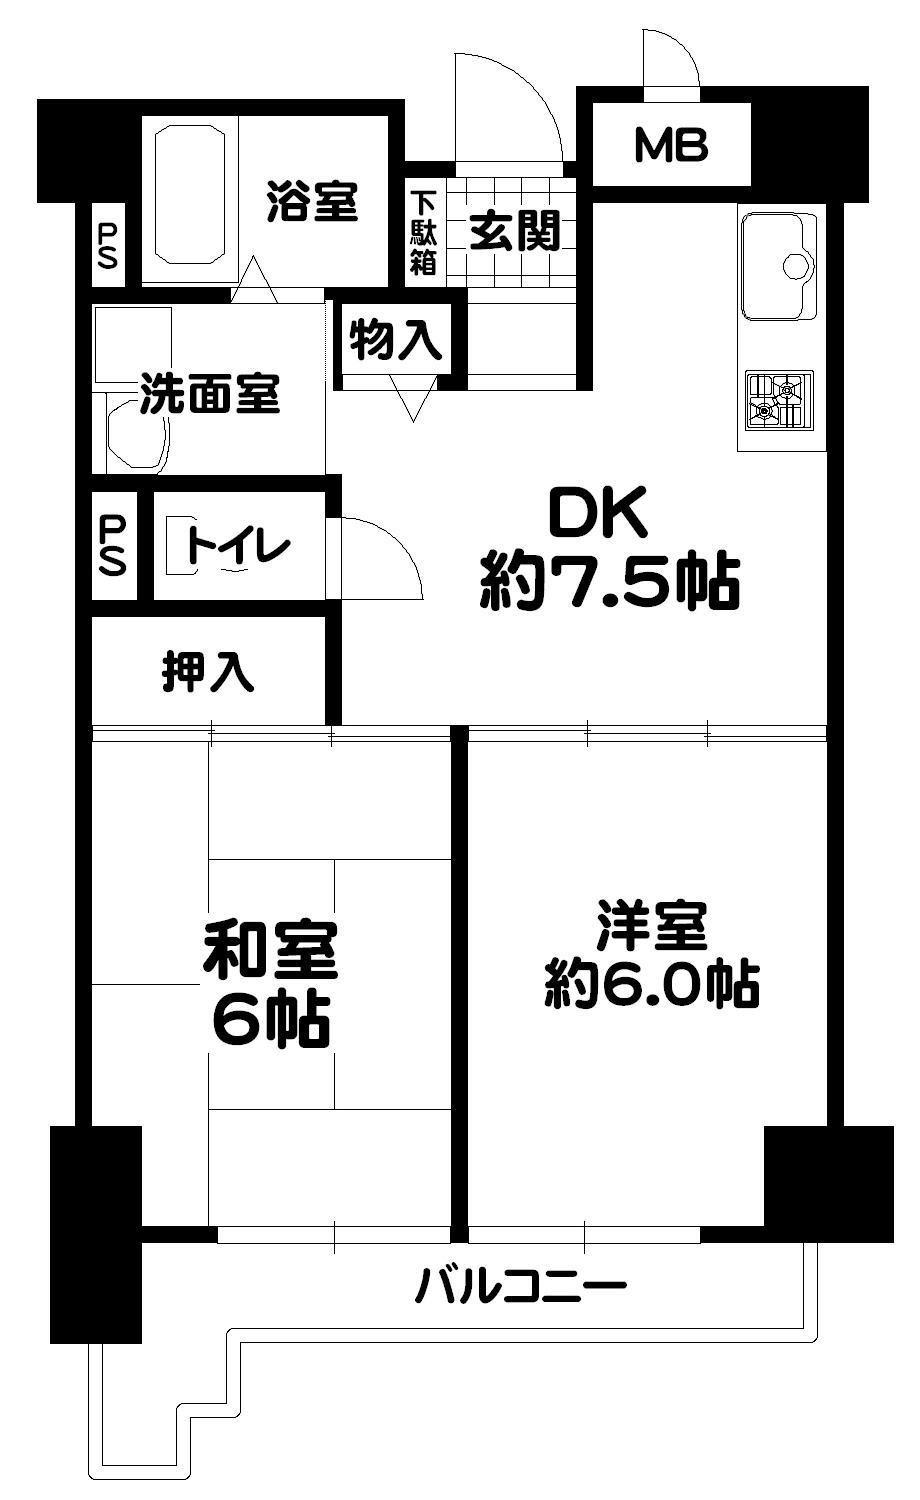 Floor plan. 2DK, Price 13.8 million yen, Occupied area 43.26 sq m , Balcony area 6.38 sq m